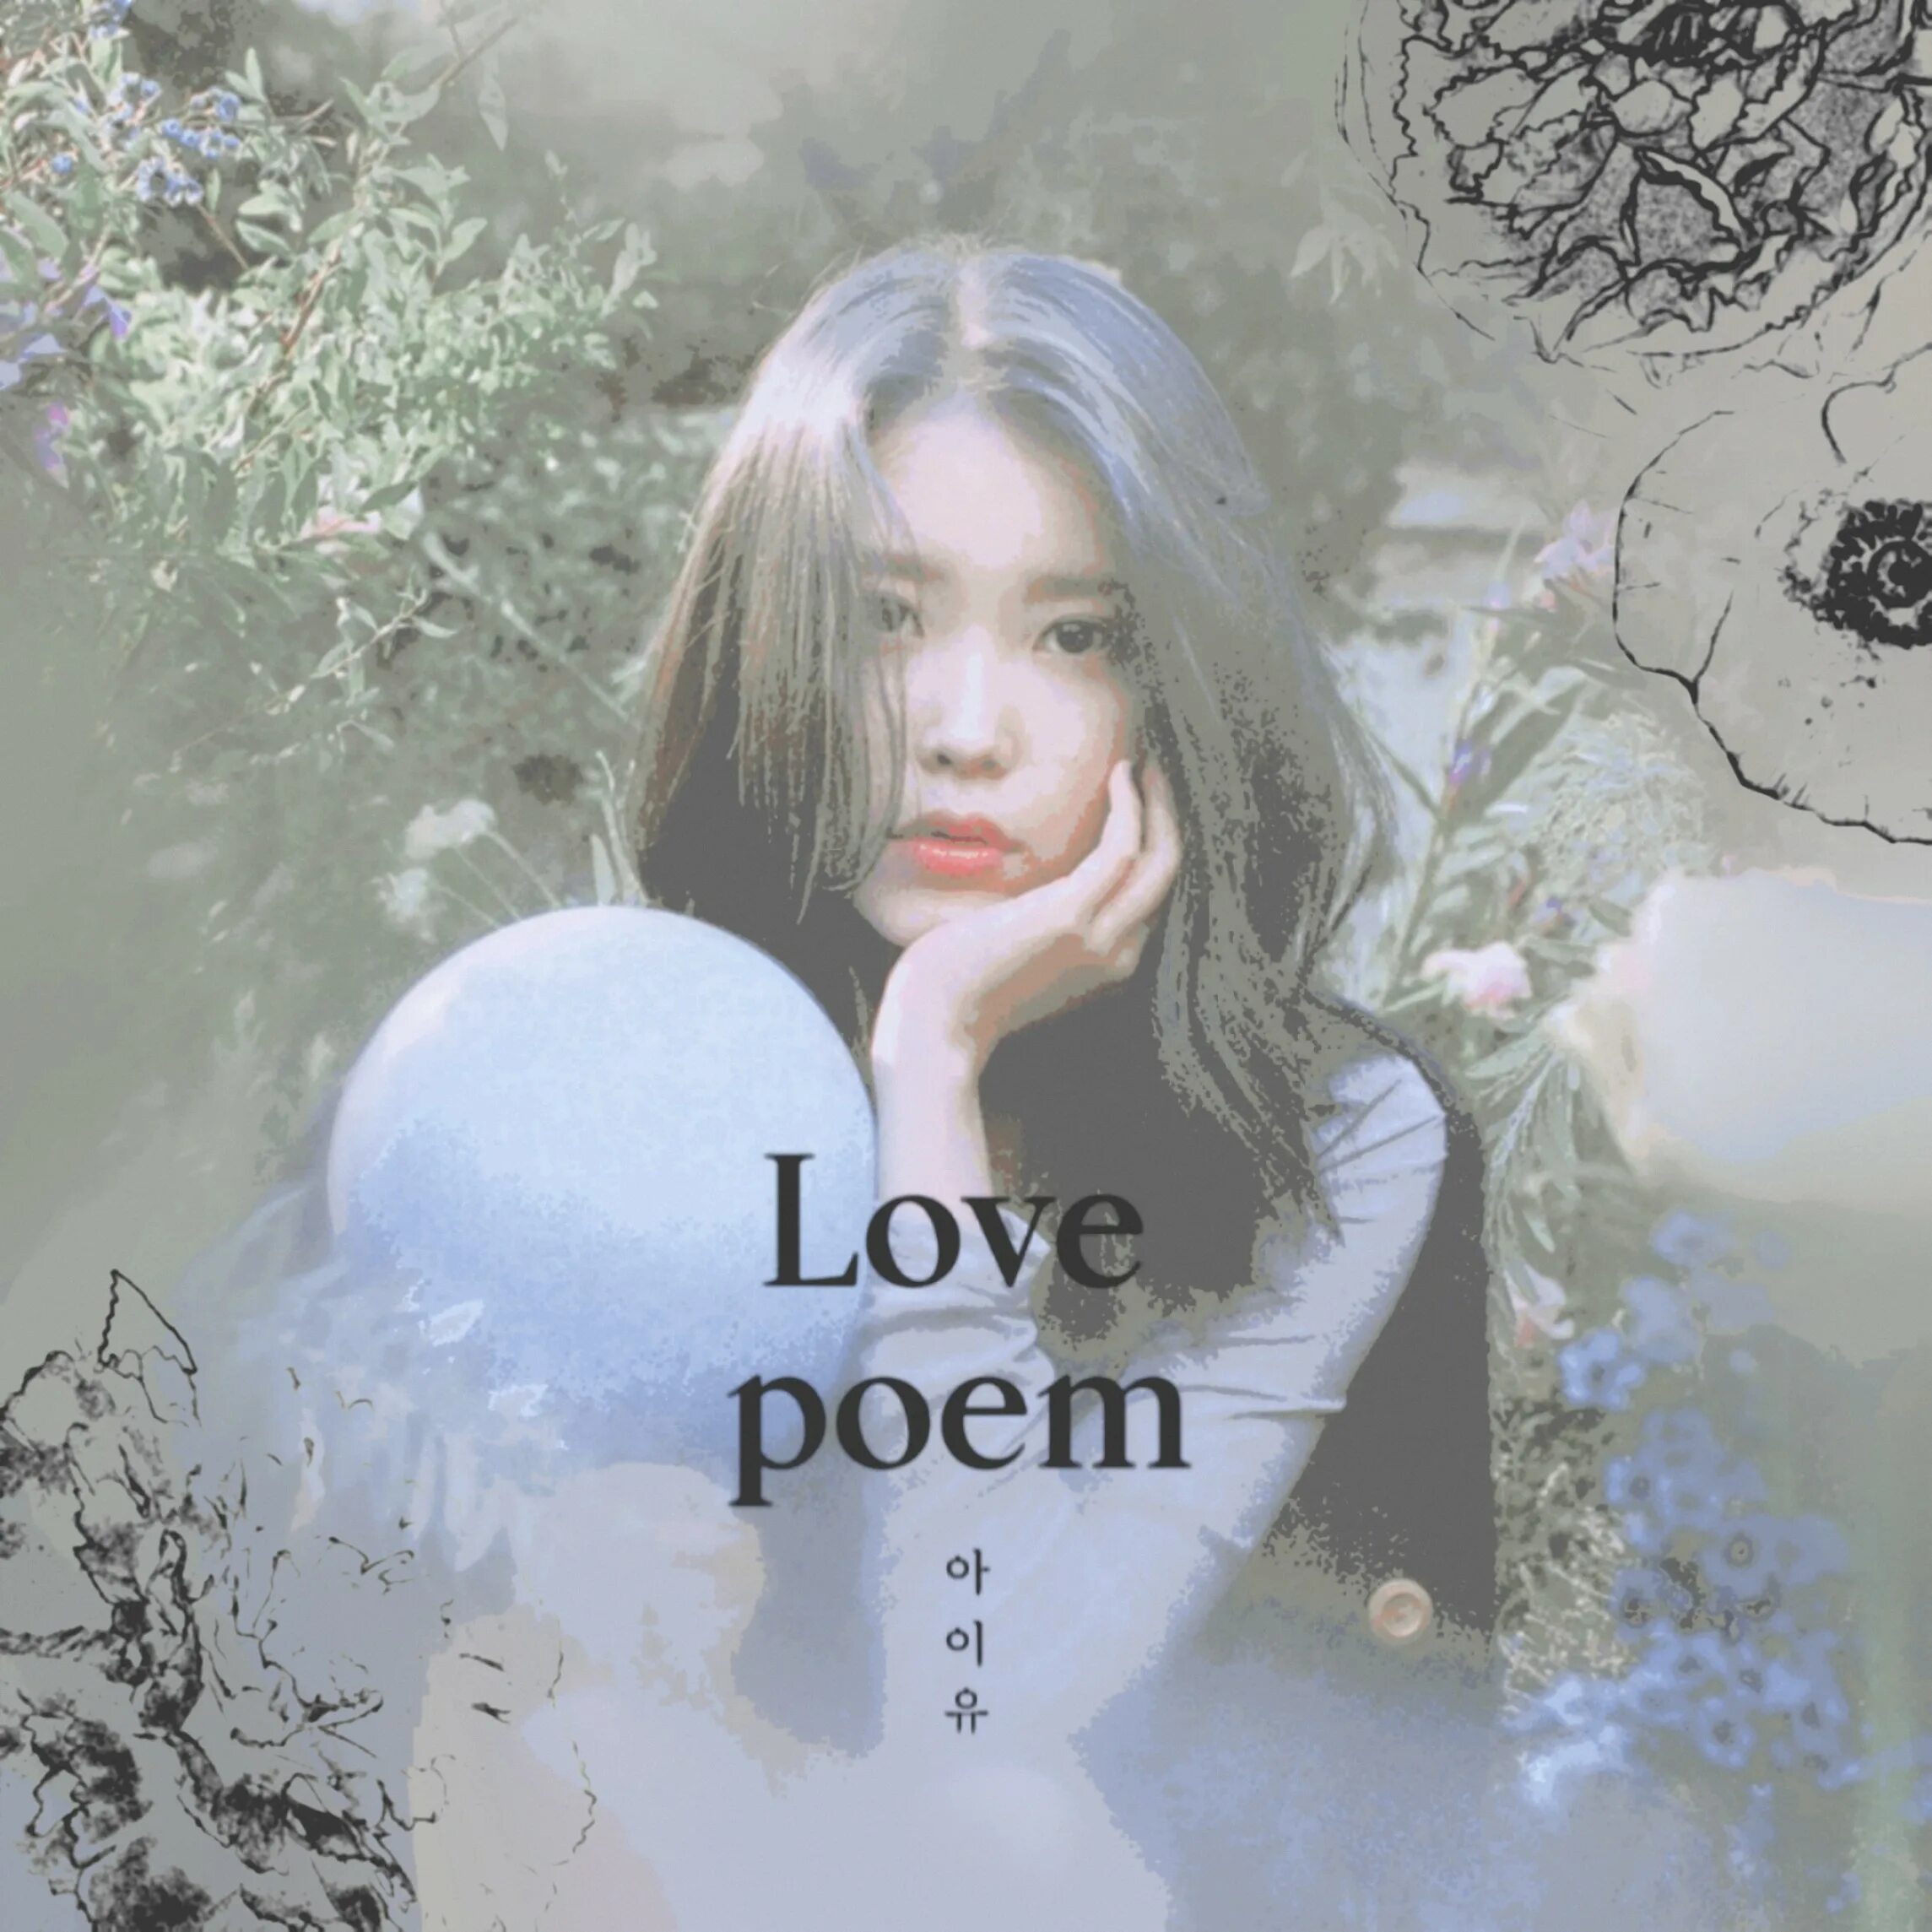 Love wins iu перевод. Альбом IU Love poem. IU Love poem album Cover. The Love poems. IU album.